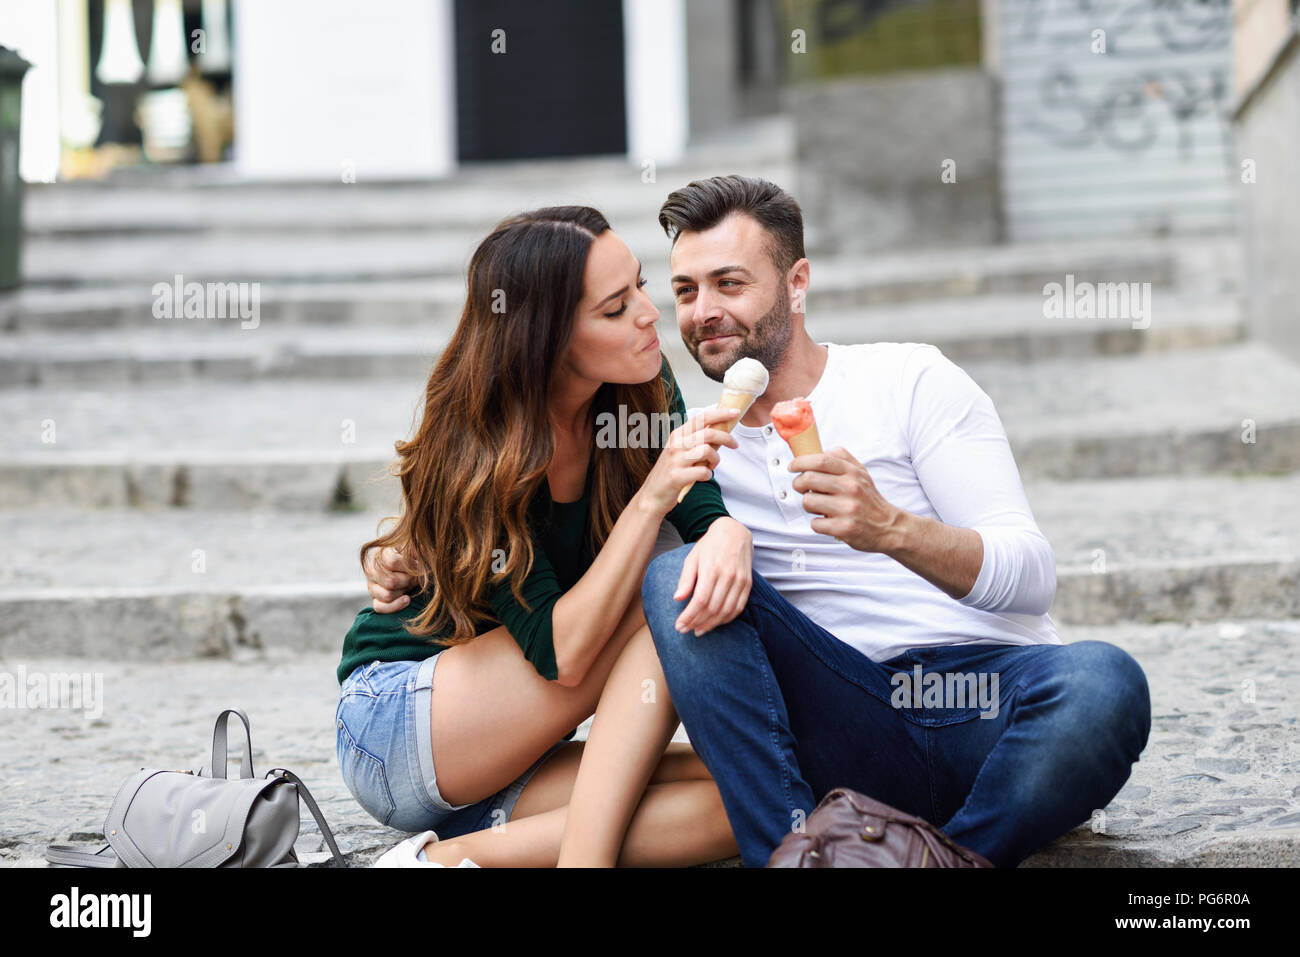 Tourist couple sharing ice cream cones in the city Stock Photo